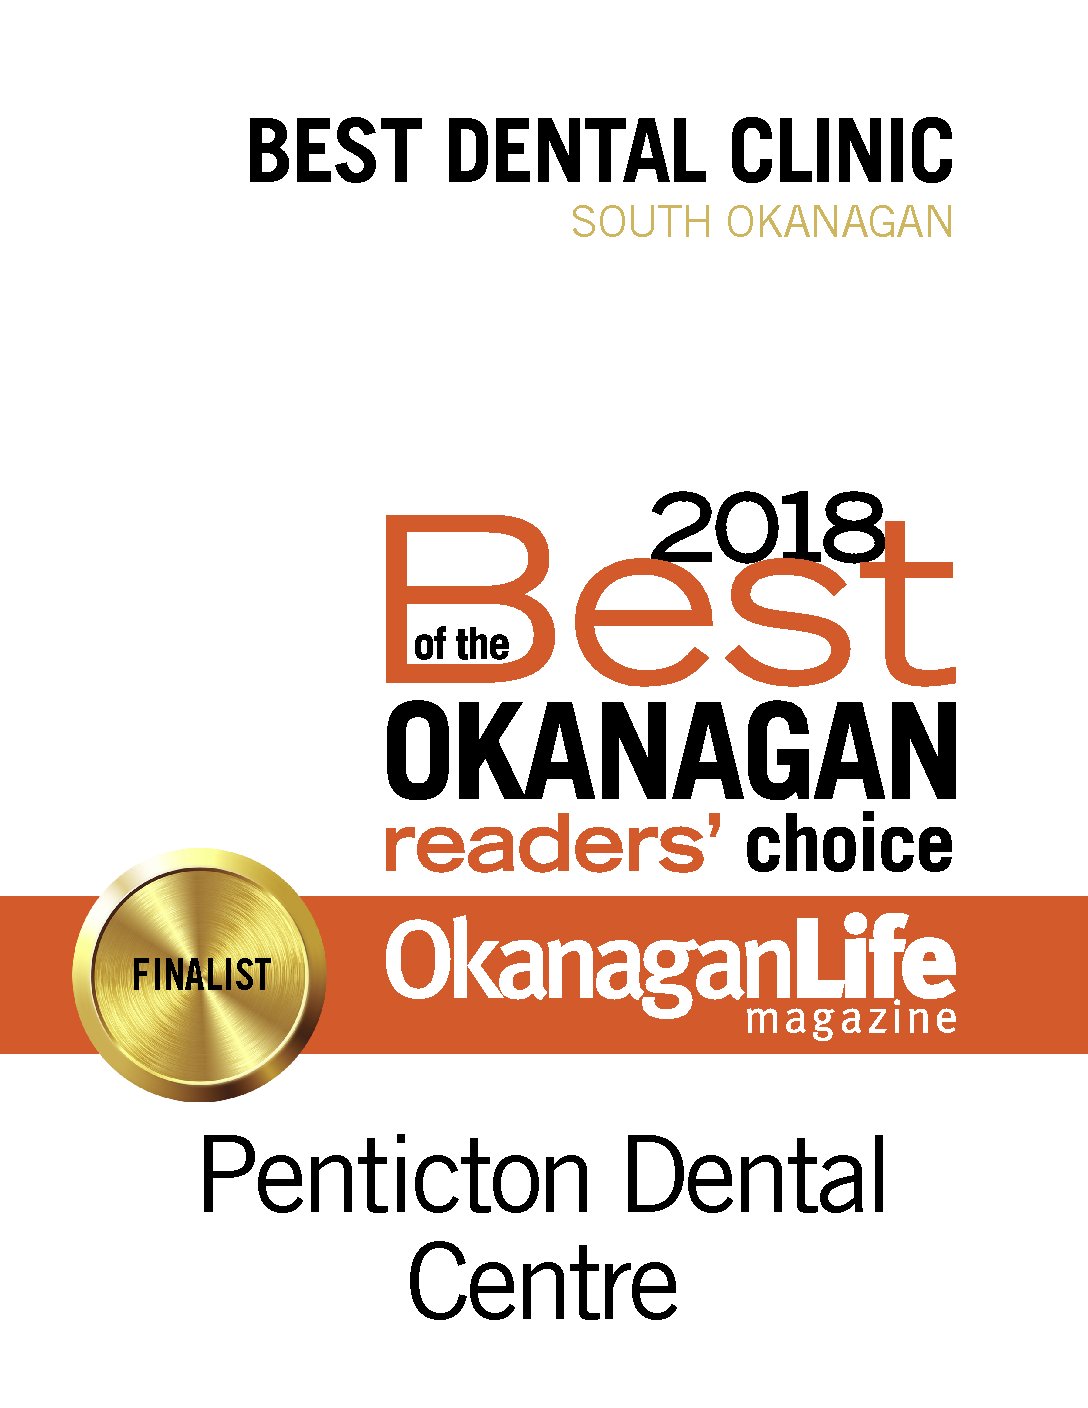 Penticton Dental Centre